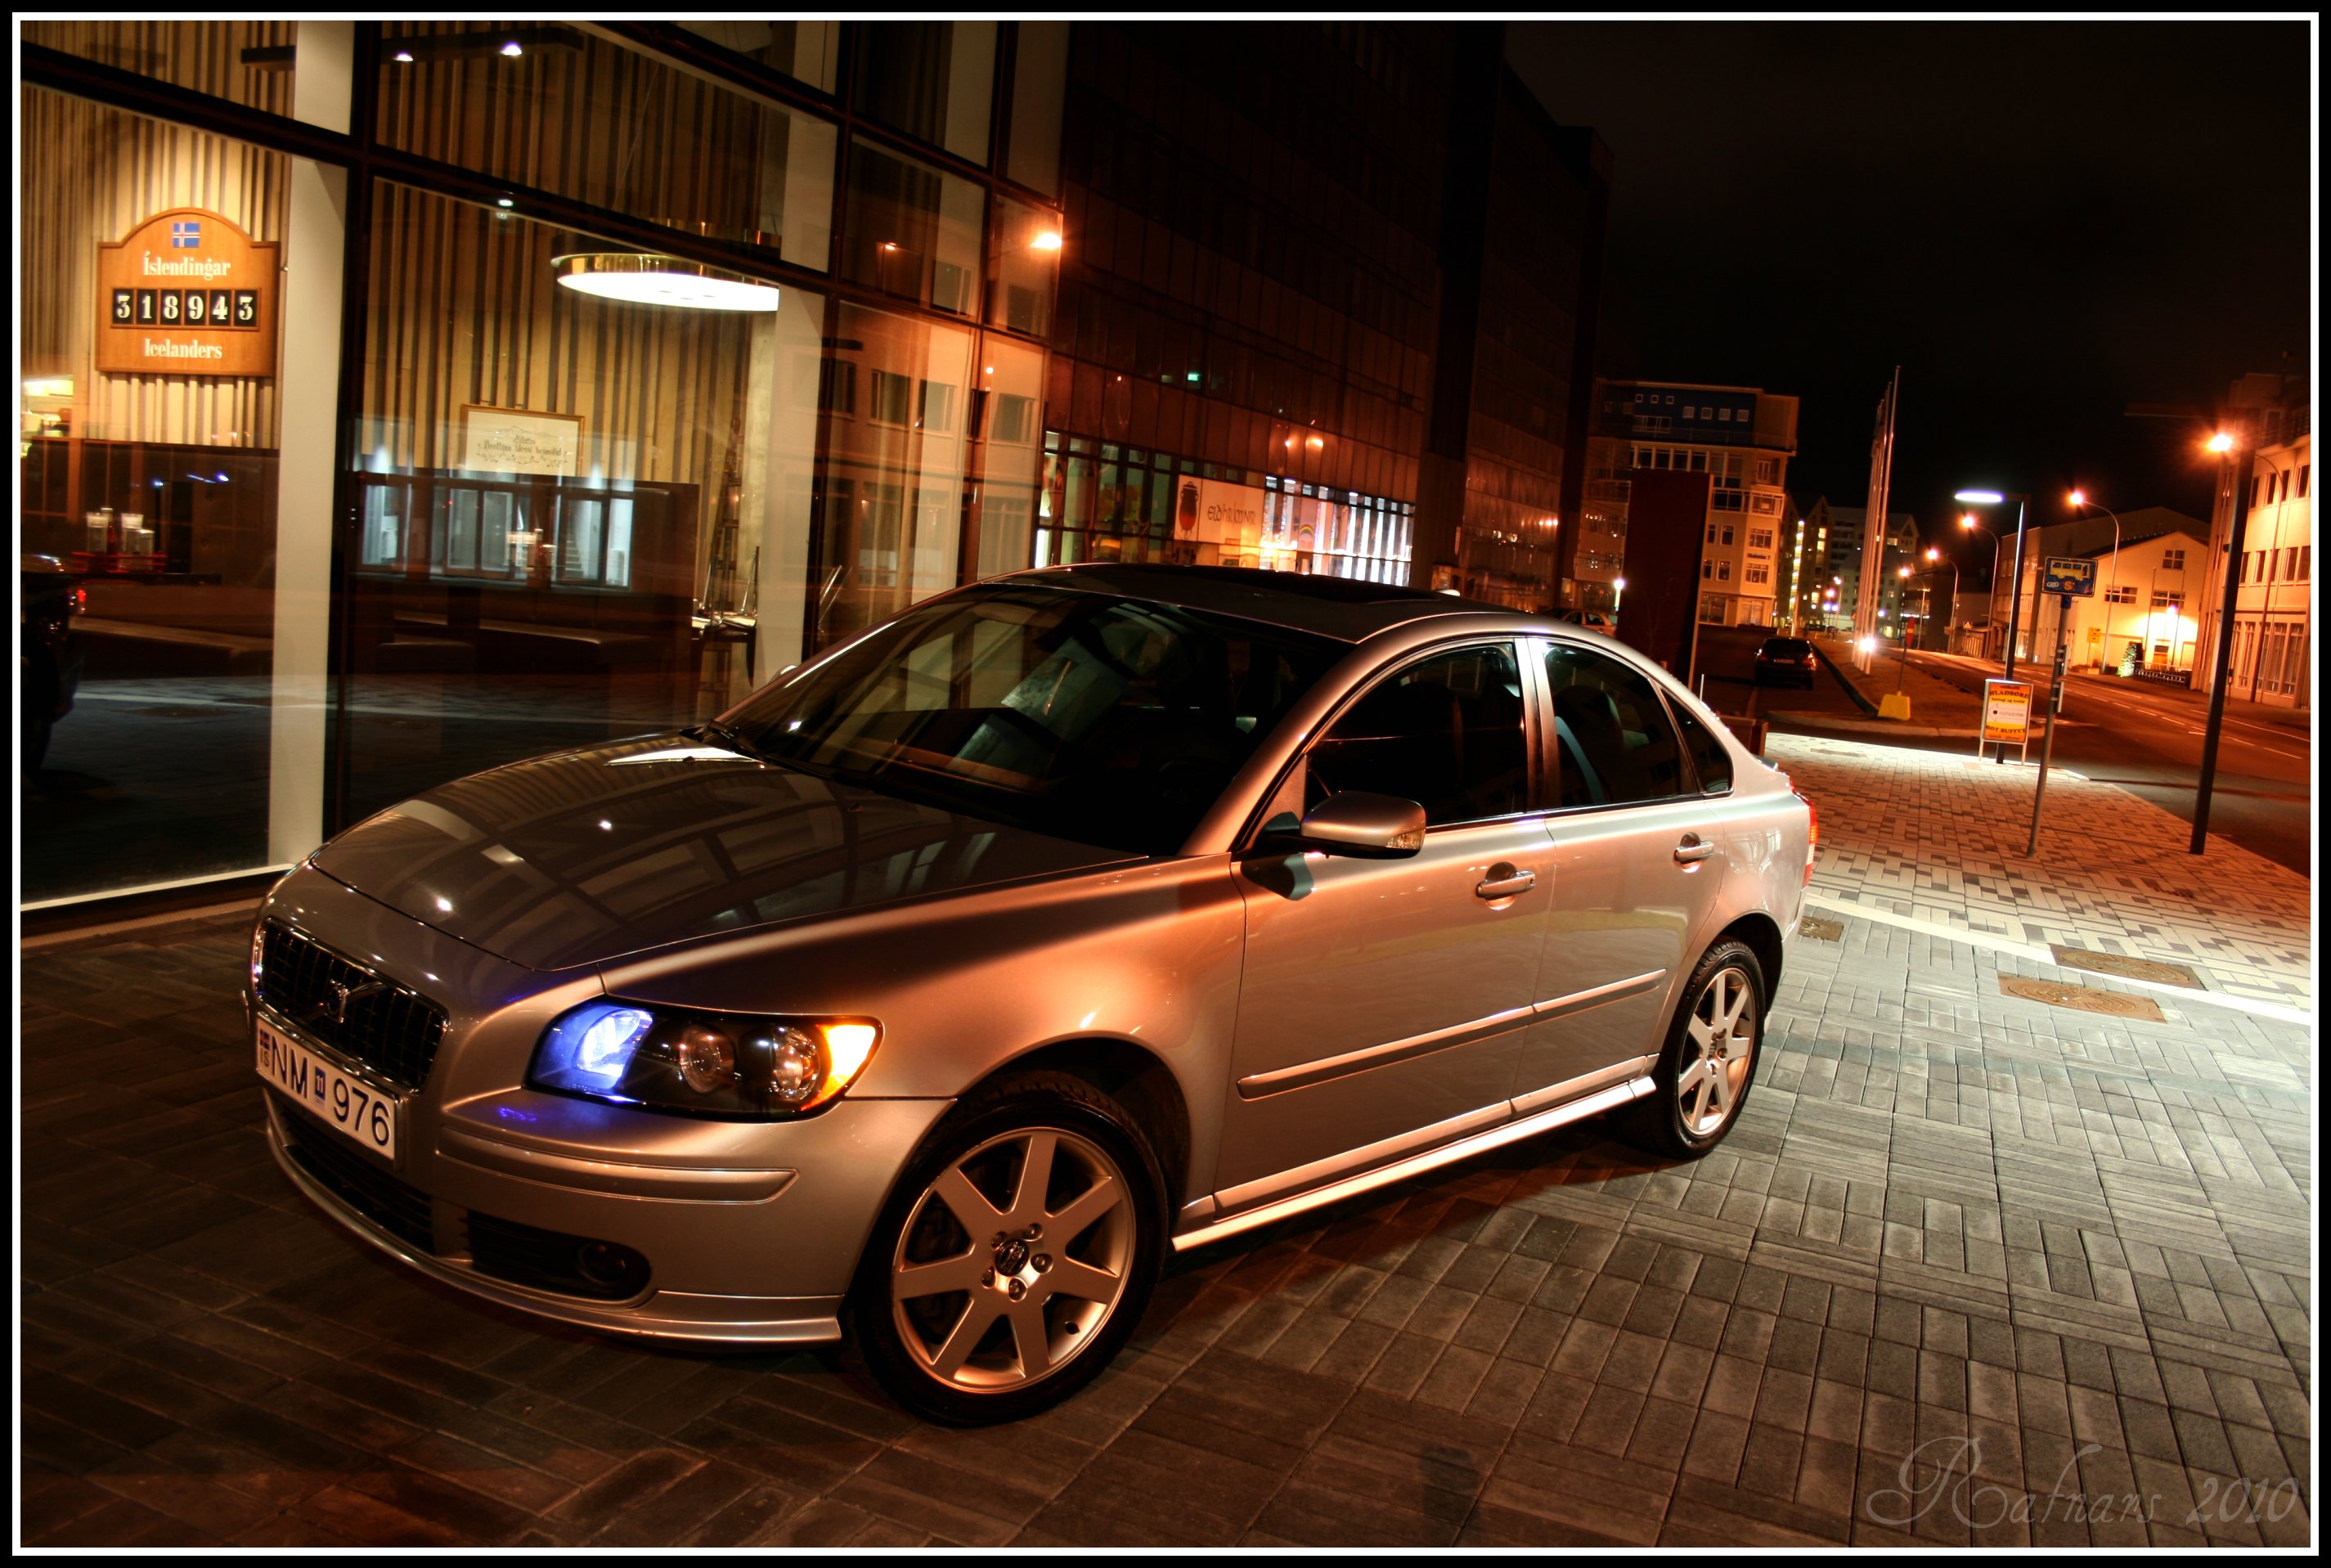 Volvo S40 T5 2006 | Flickr - Photo Sharing!